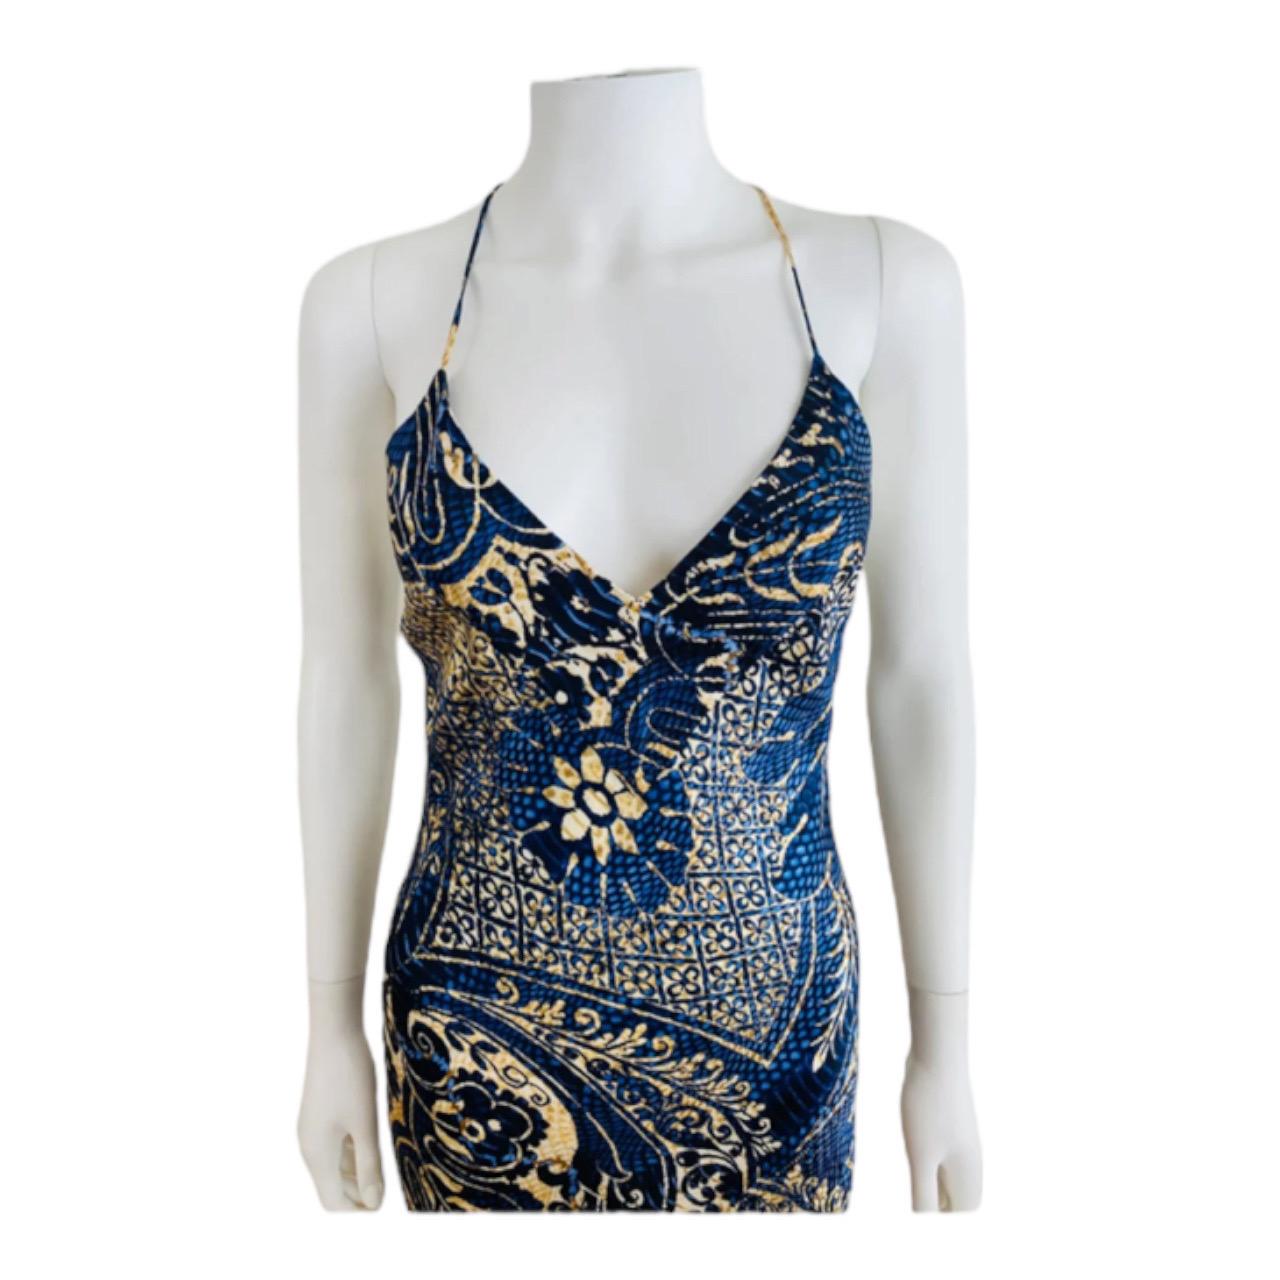 Vintage 2005 Roberto Cavalli Blue + Tan Printed Bias Silk Maxi Dress Mermaid Hem In Excellent Condition For Sale In Denver, CO